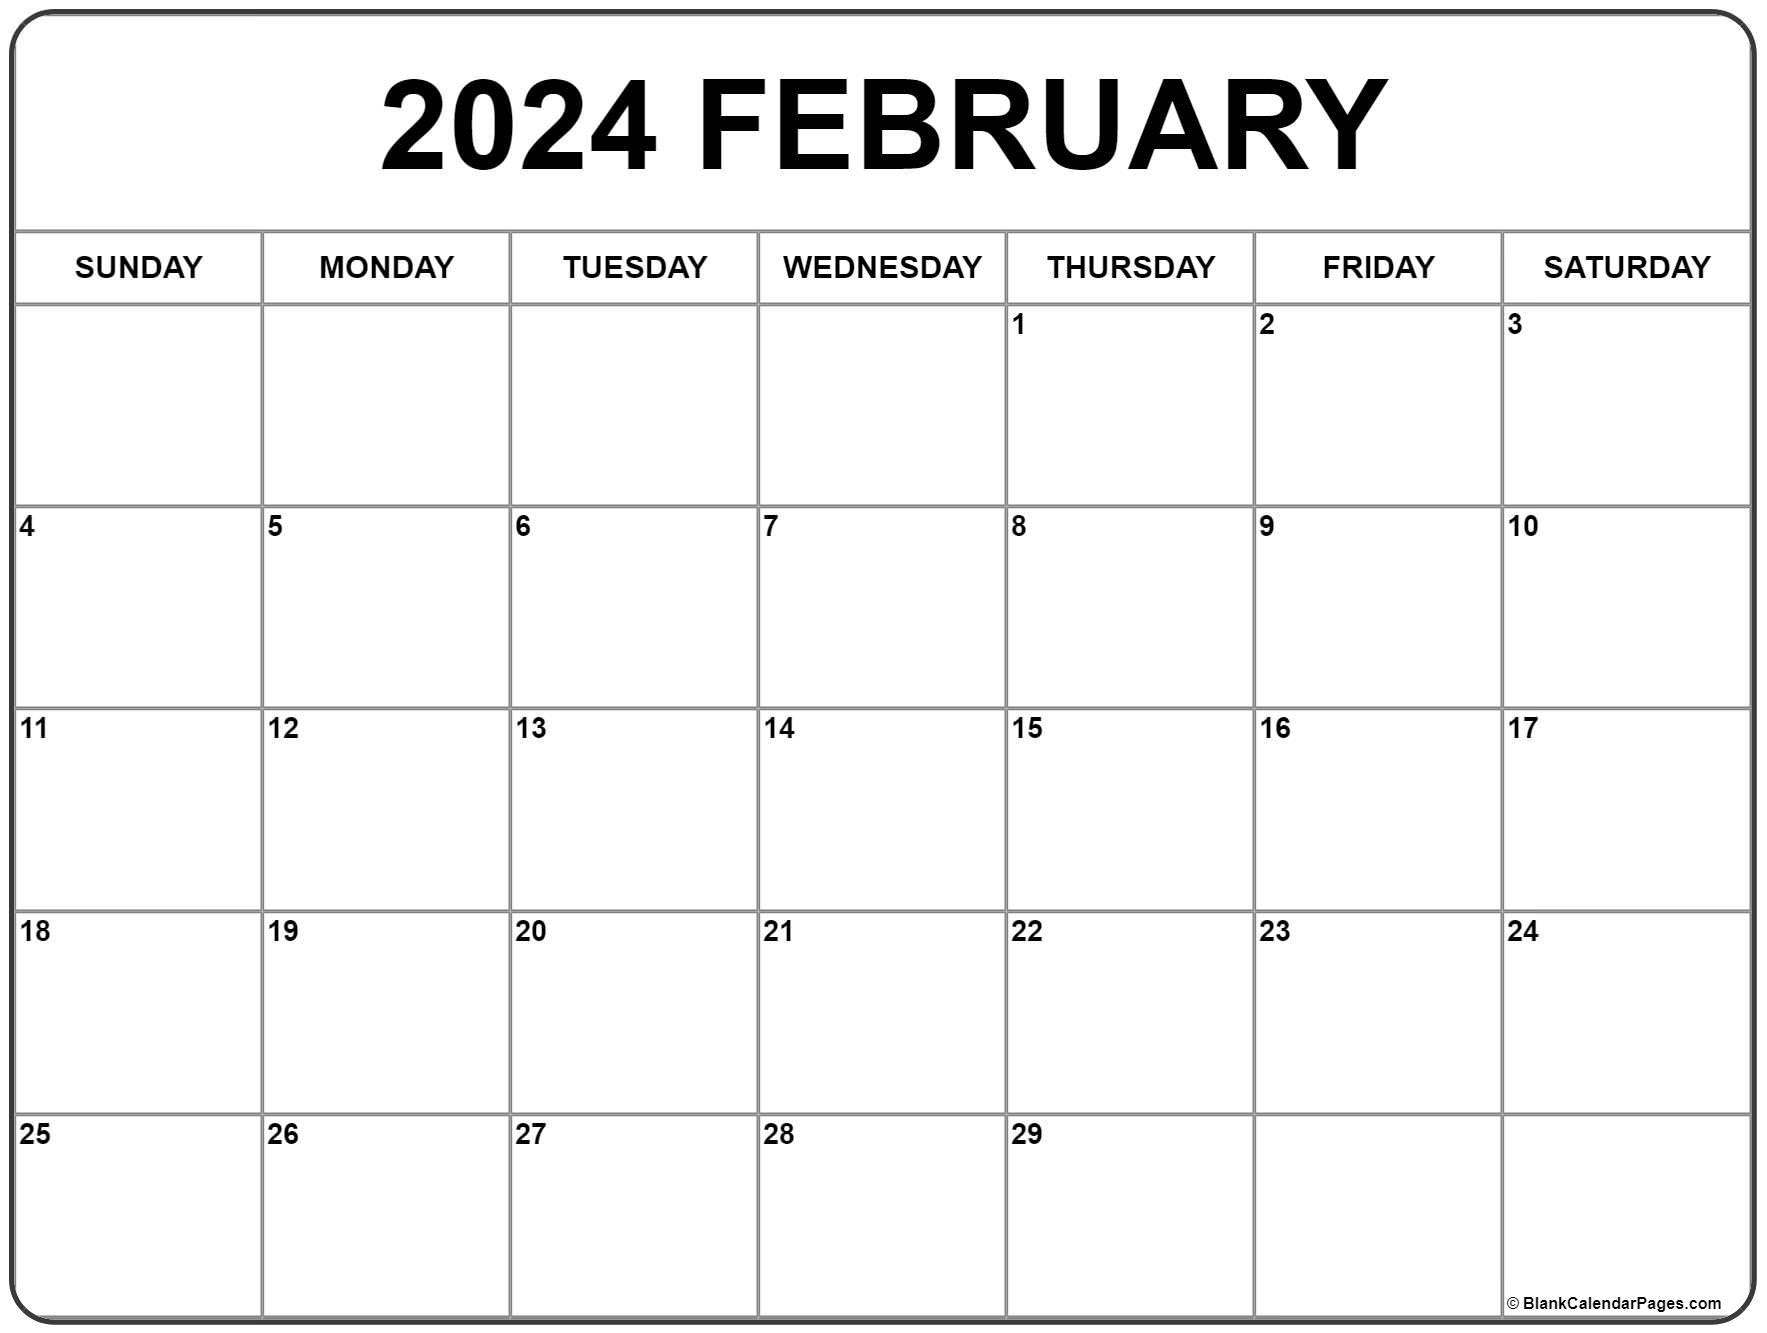 Feb 2021 Calendar Printable February 2021 calendar | free printable monthly calendars